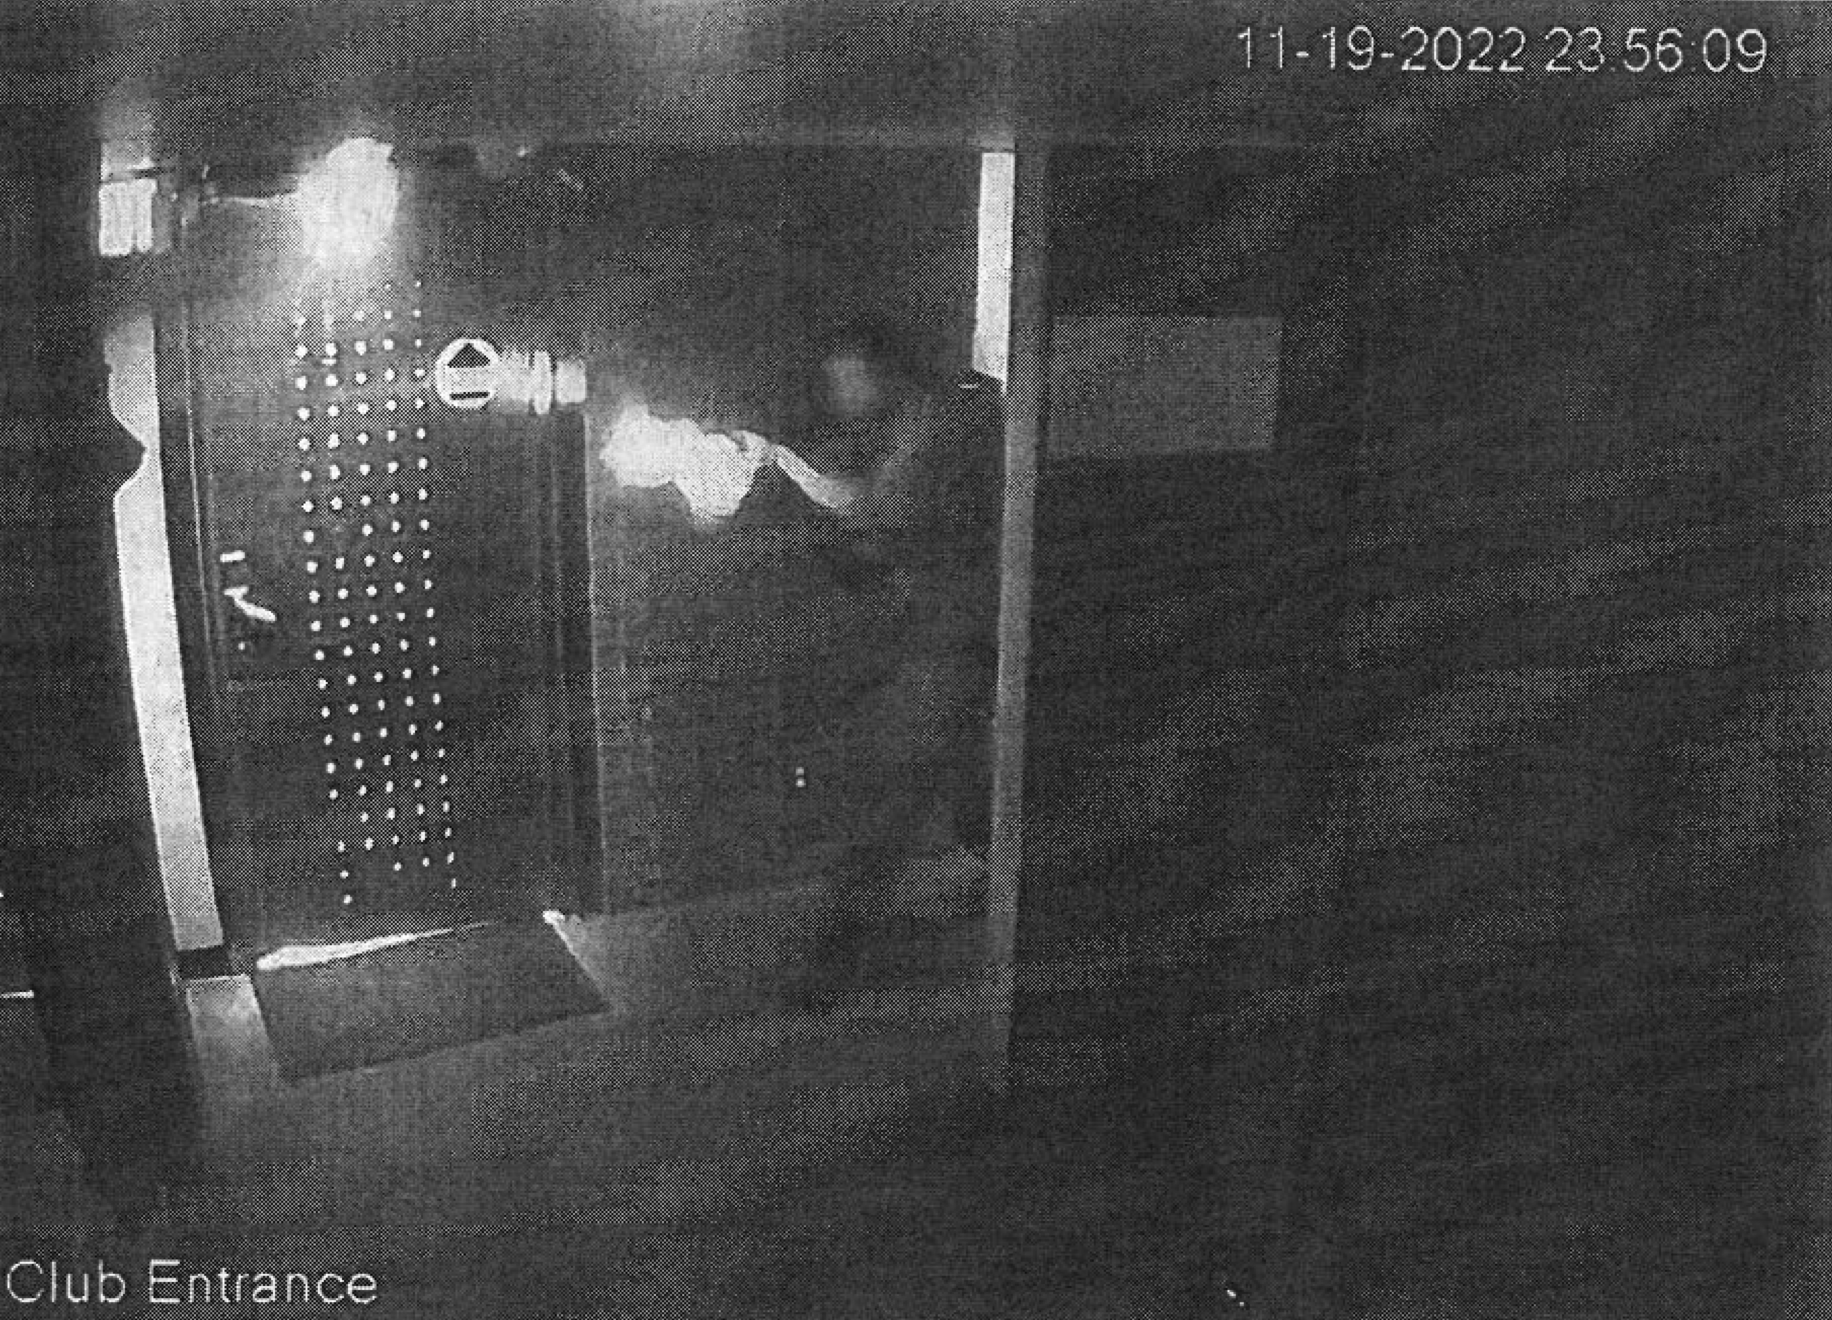 A surveillance image in an unsealed arrest affidavit allegedly shows suspected shooter Anderson Lee Aldrich firing into Club Q.